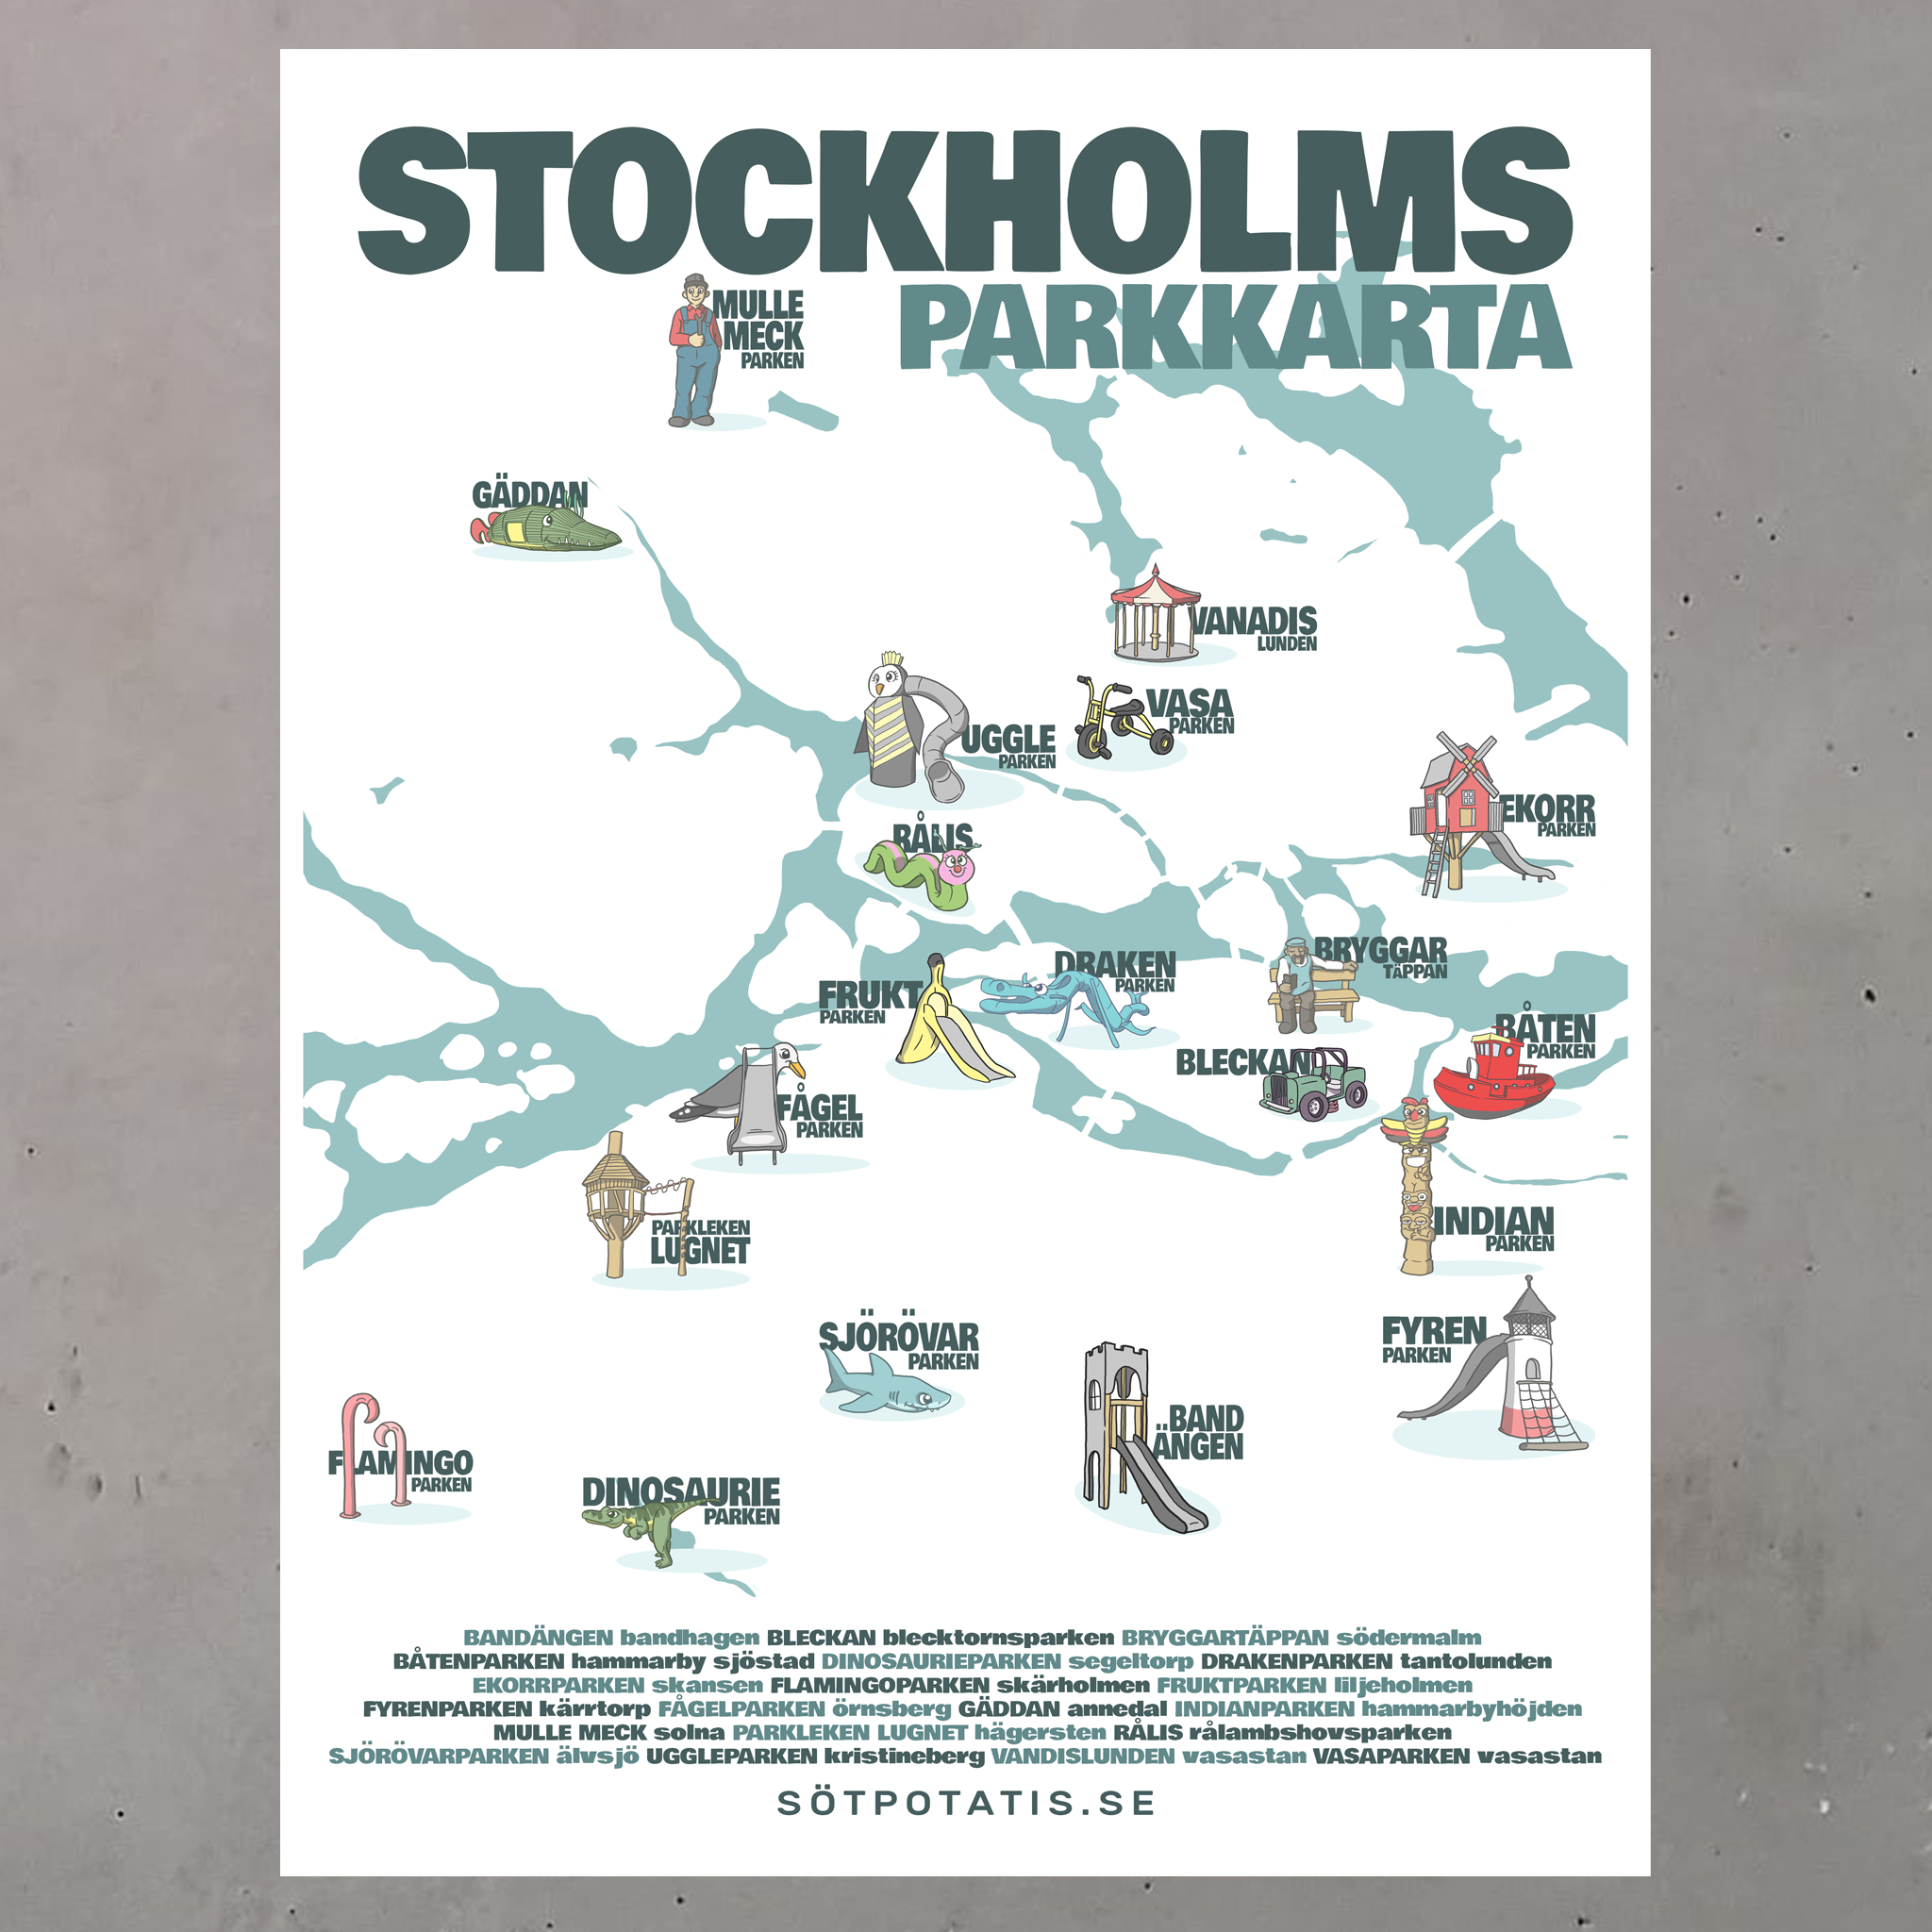 Stockholms Parkkarta